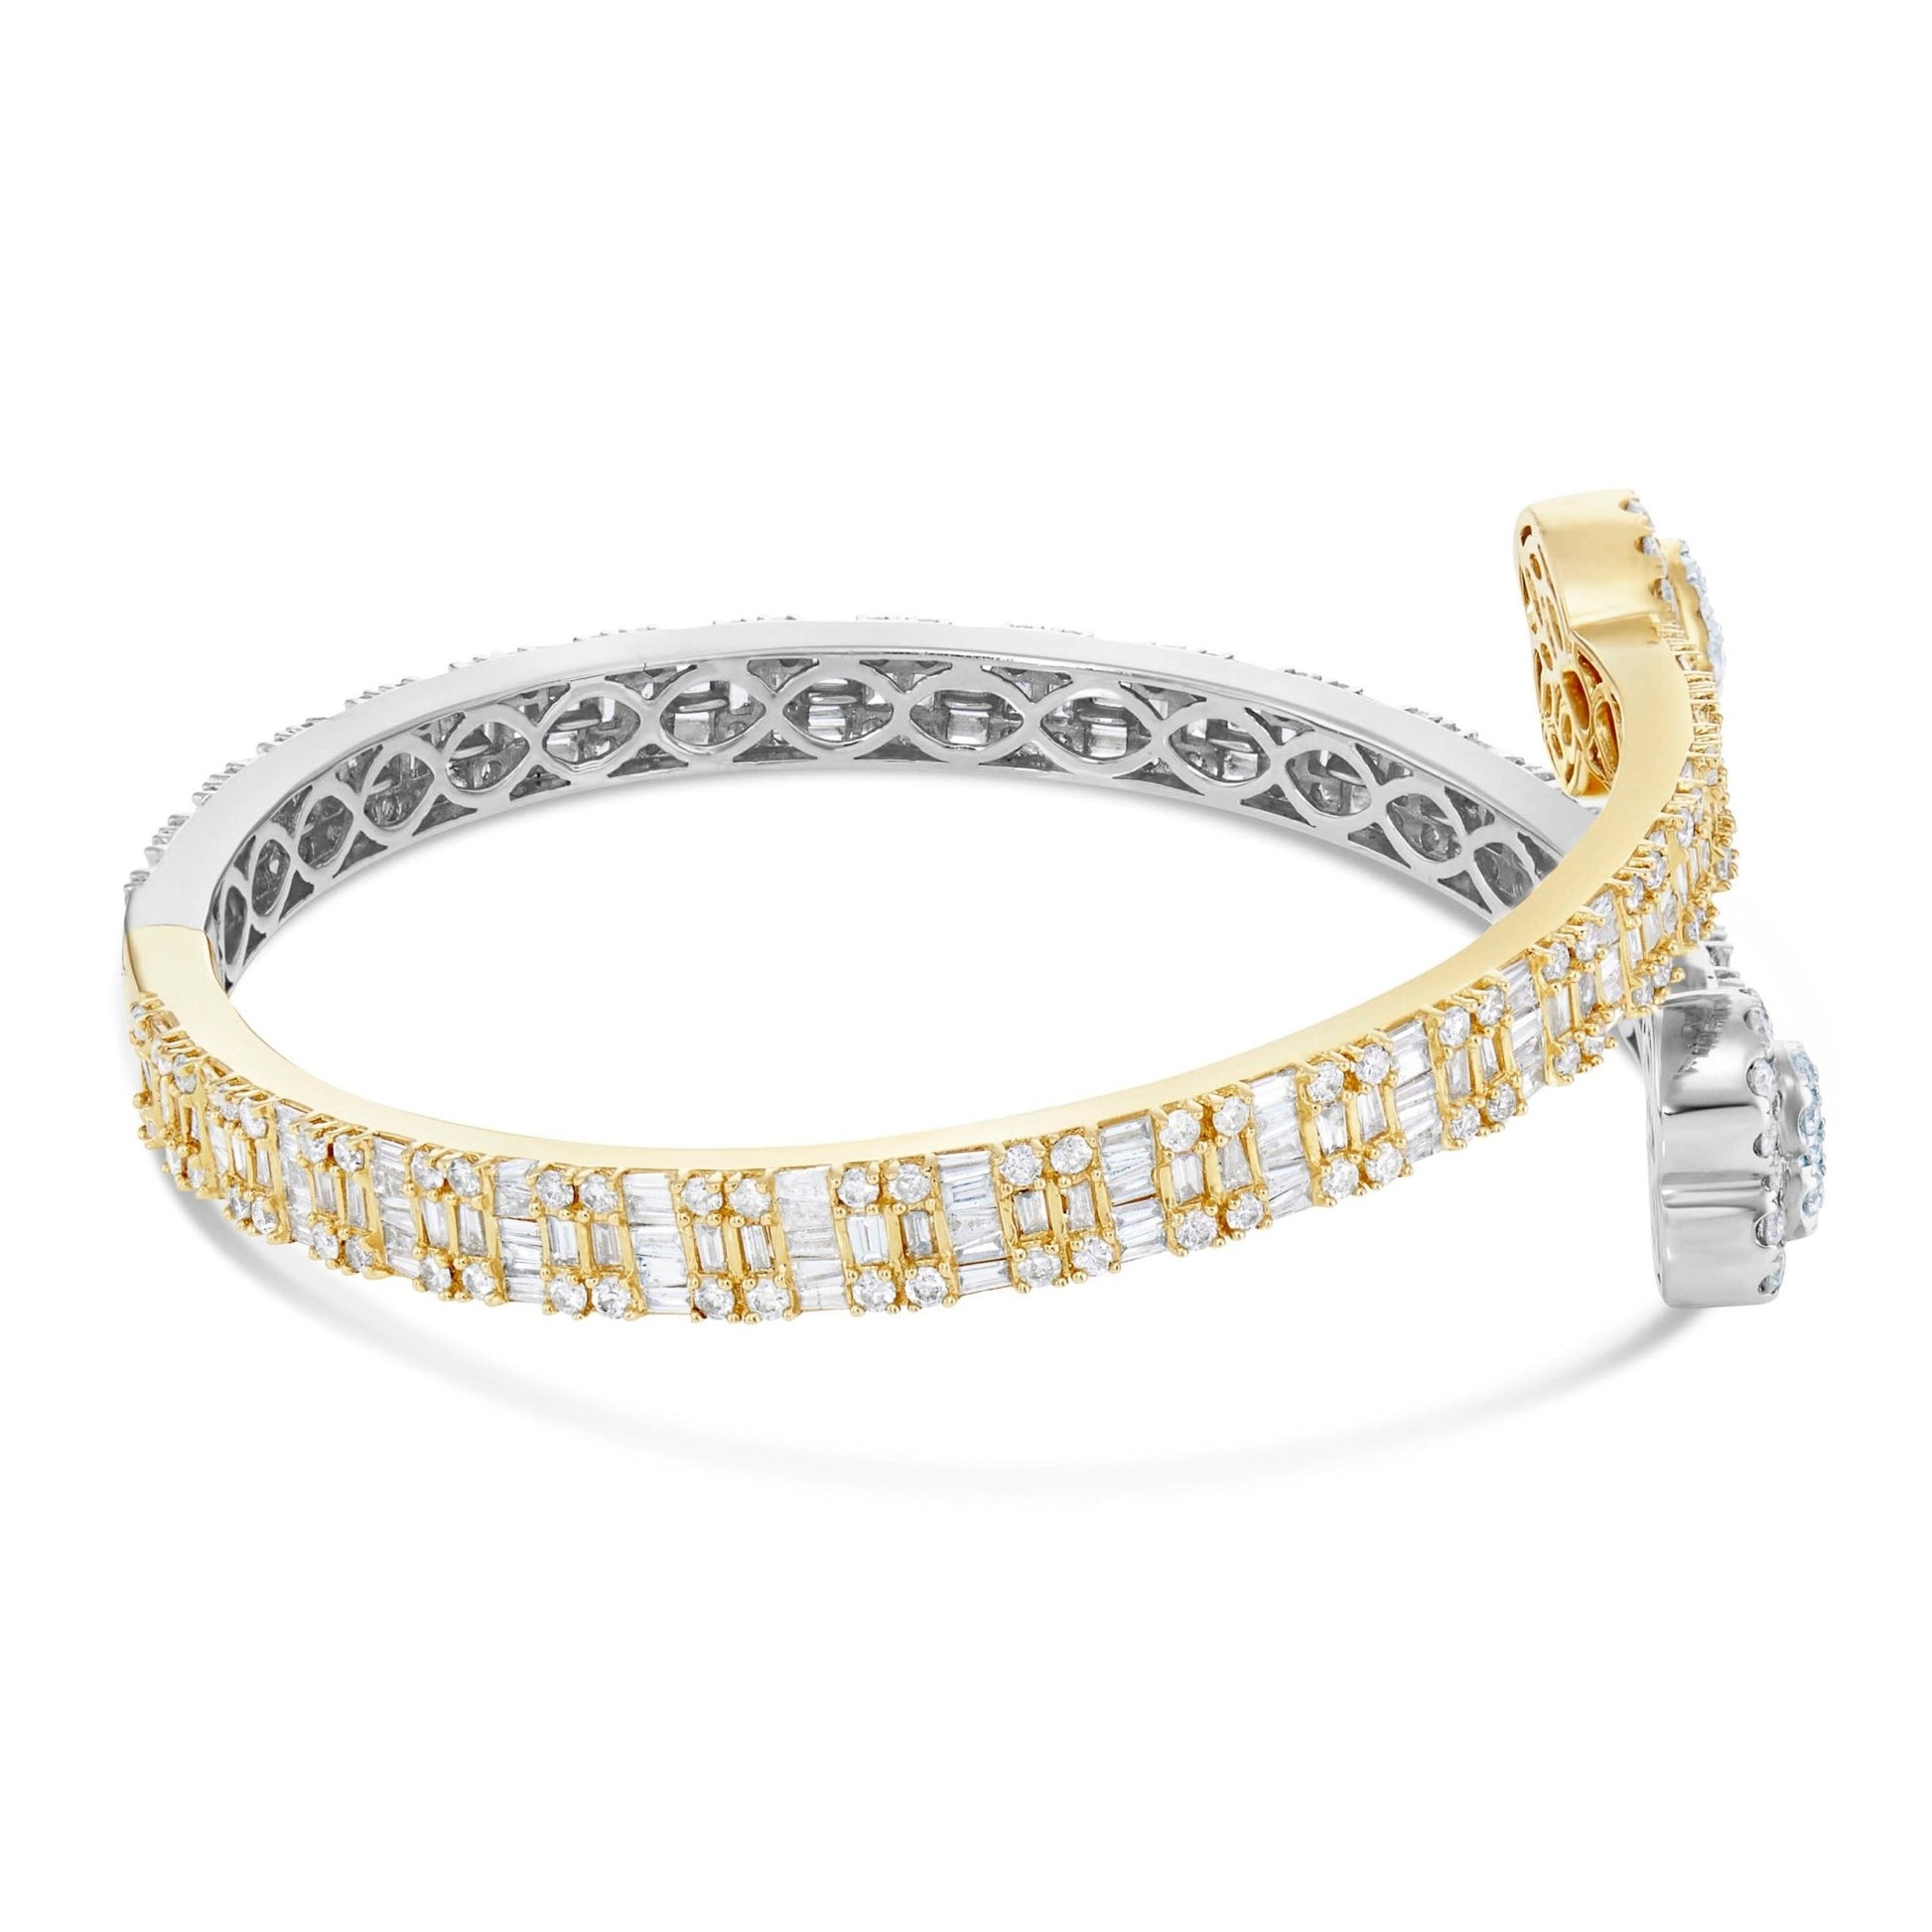 Two tone Bilevel Baguette Diamond Heart Bangle - Shyne Jewelers 170-00227 Yellow & White Gold Shyne Jewelers